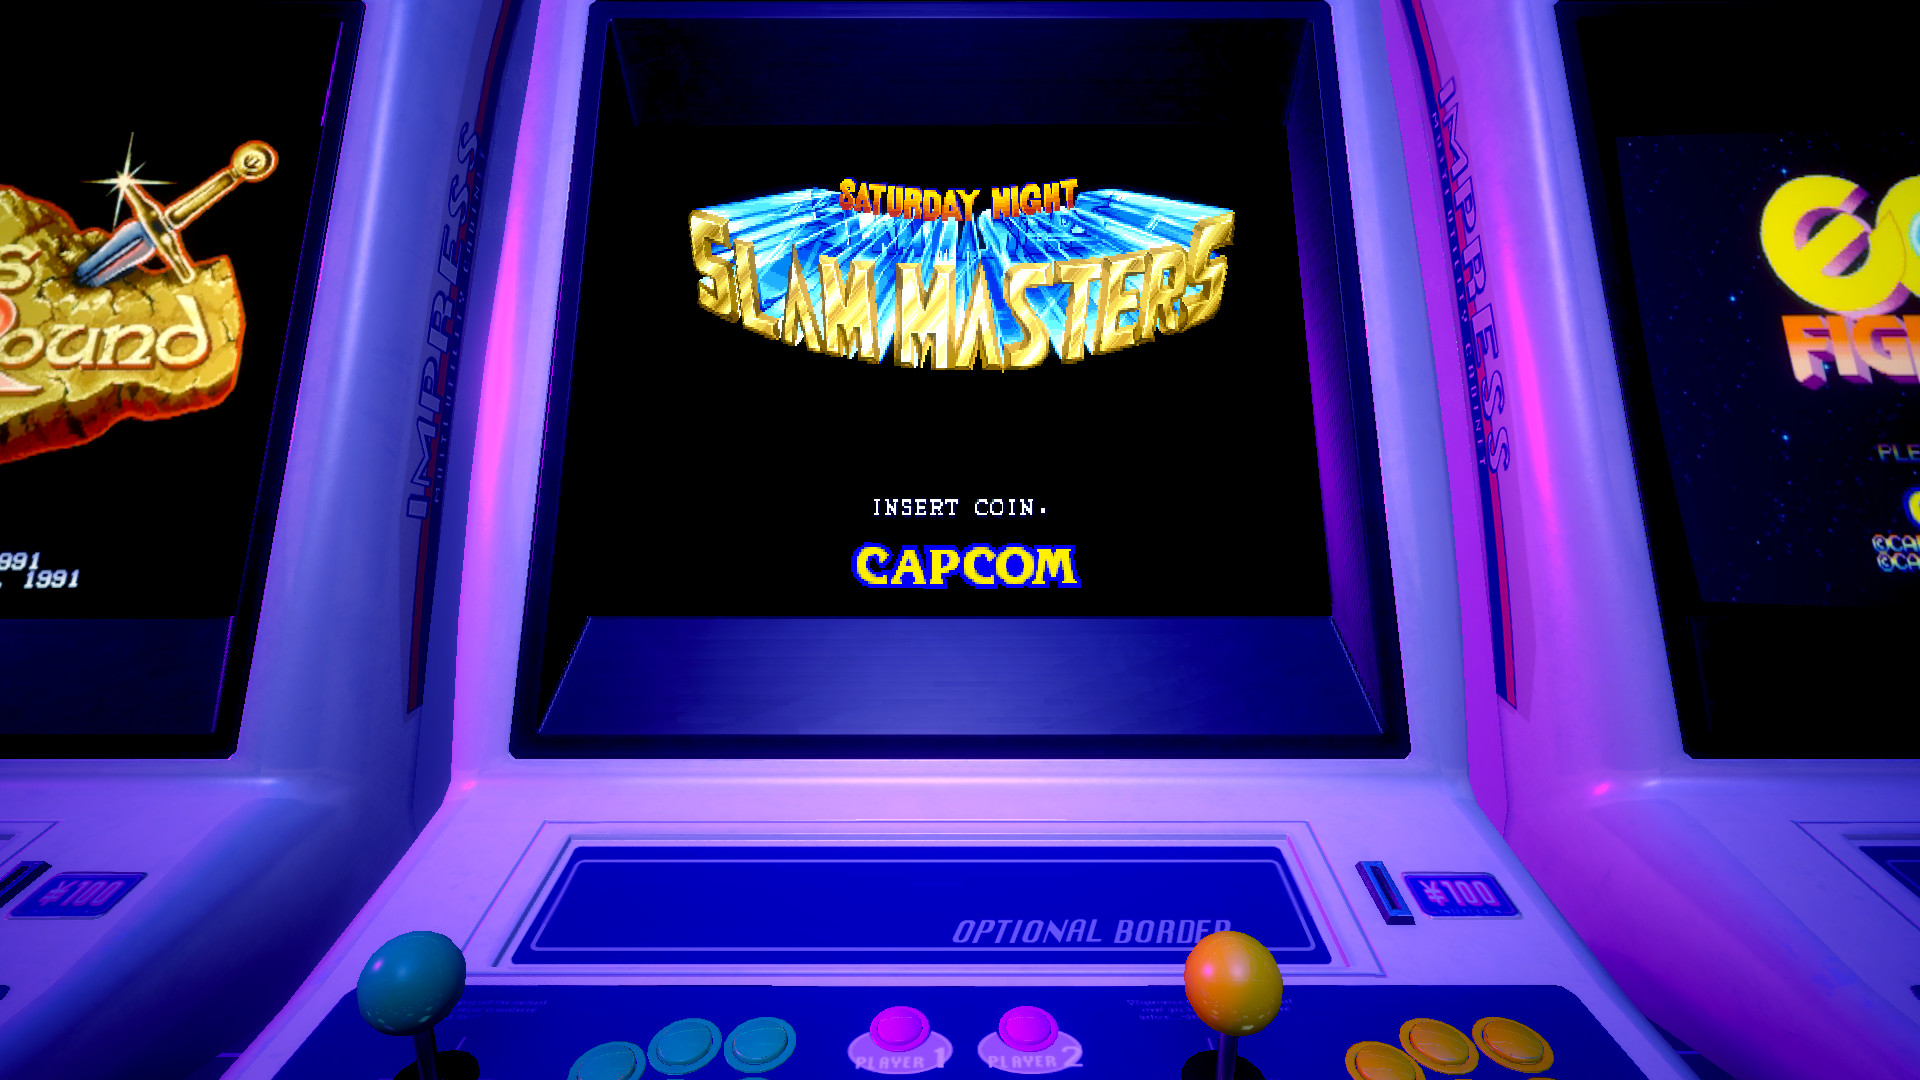 Capcom Arcade 2nd Stadium: SATURDAY NIGHT SLAM MASTERS Featured Screenshot #1